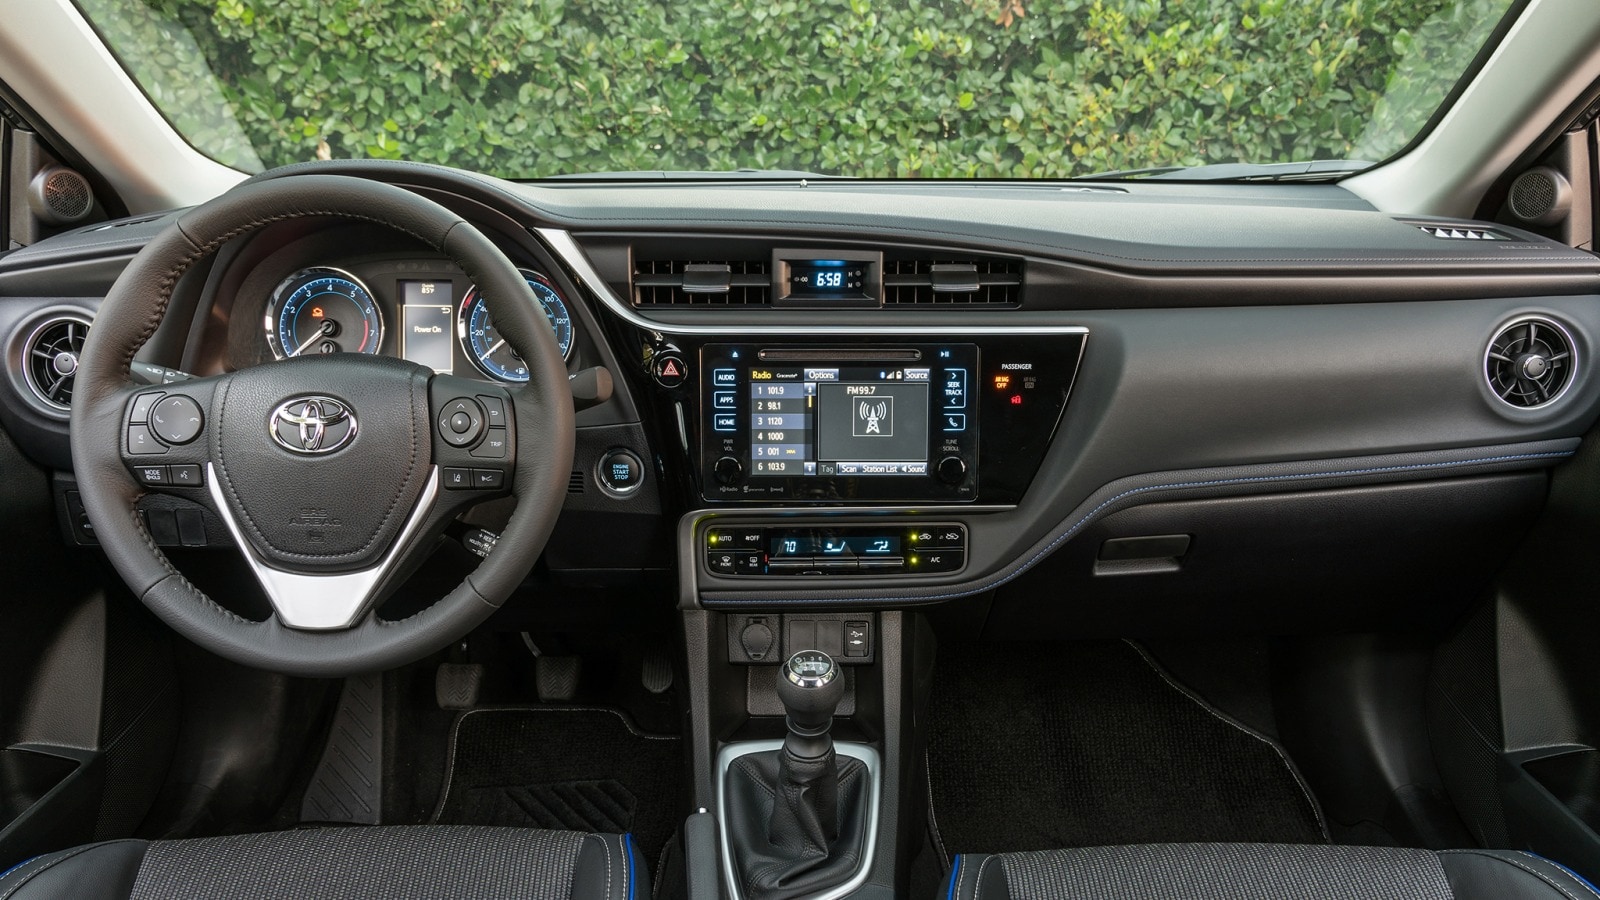 2019 Yeni Toyota Corolla Review